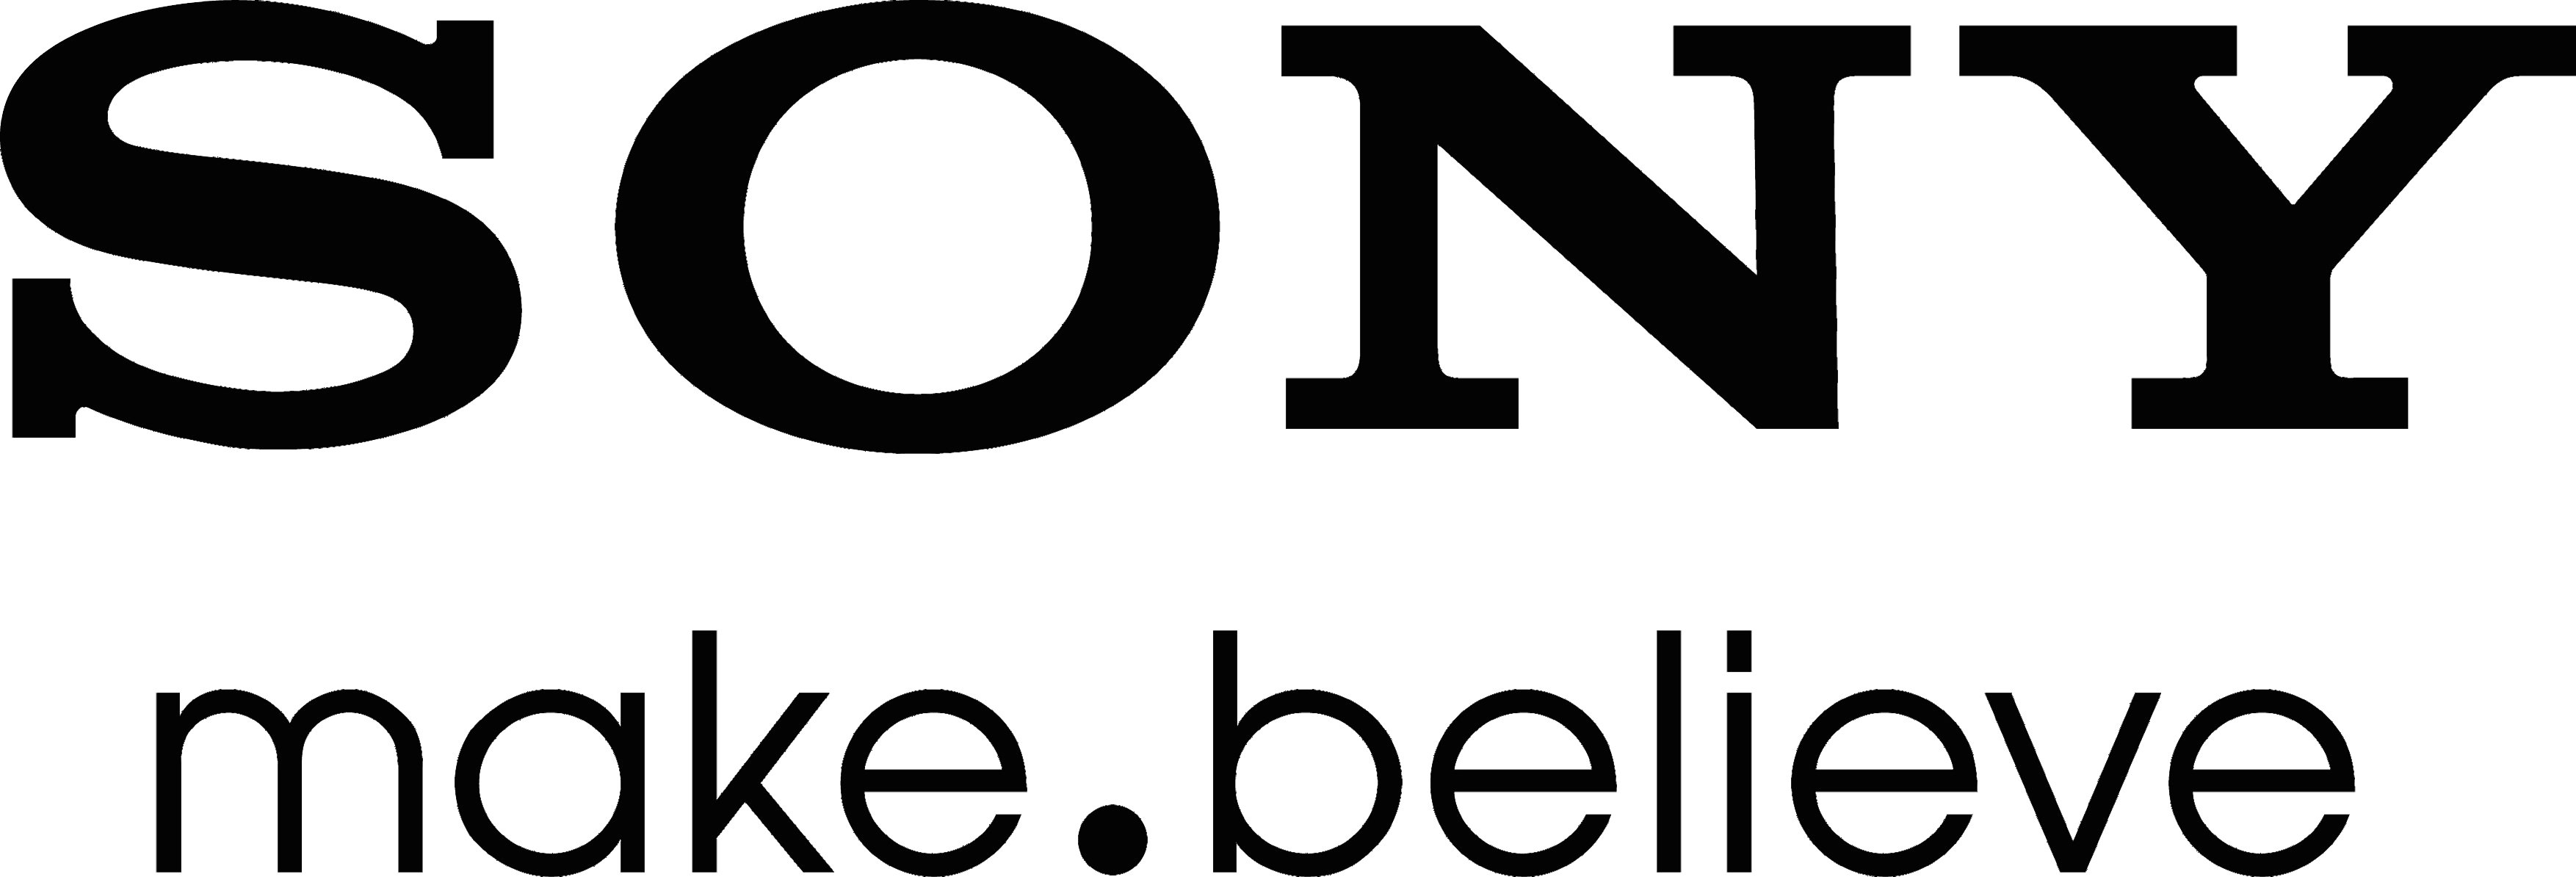 سوني logo PNG الصورة